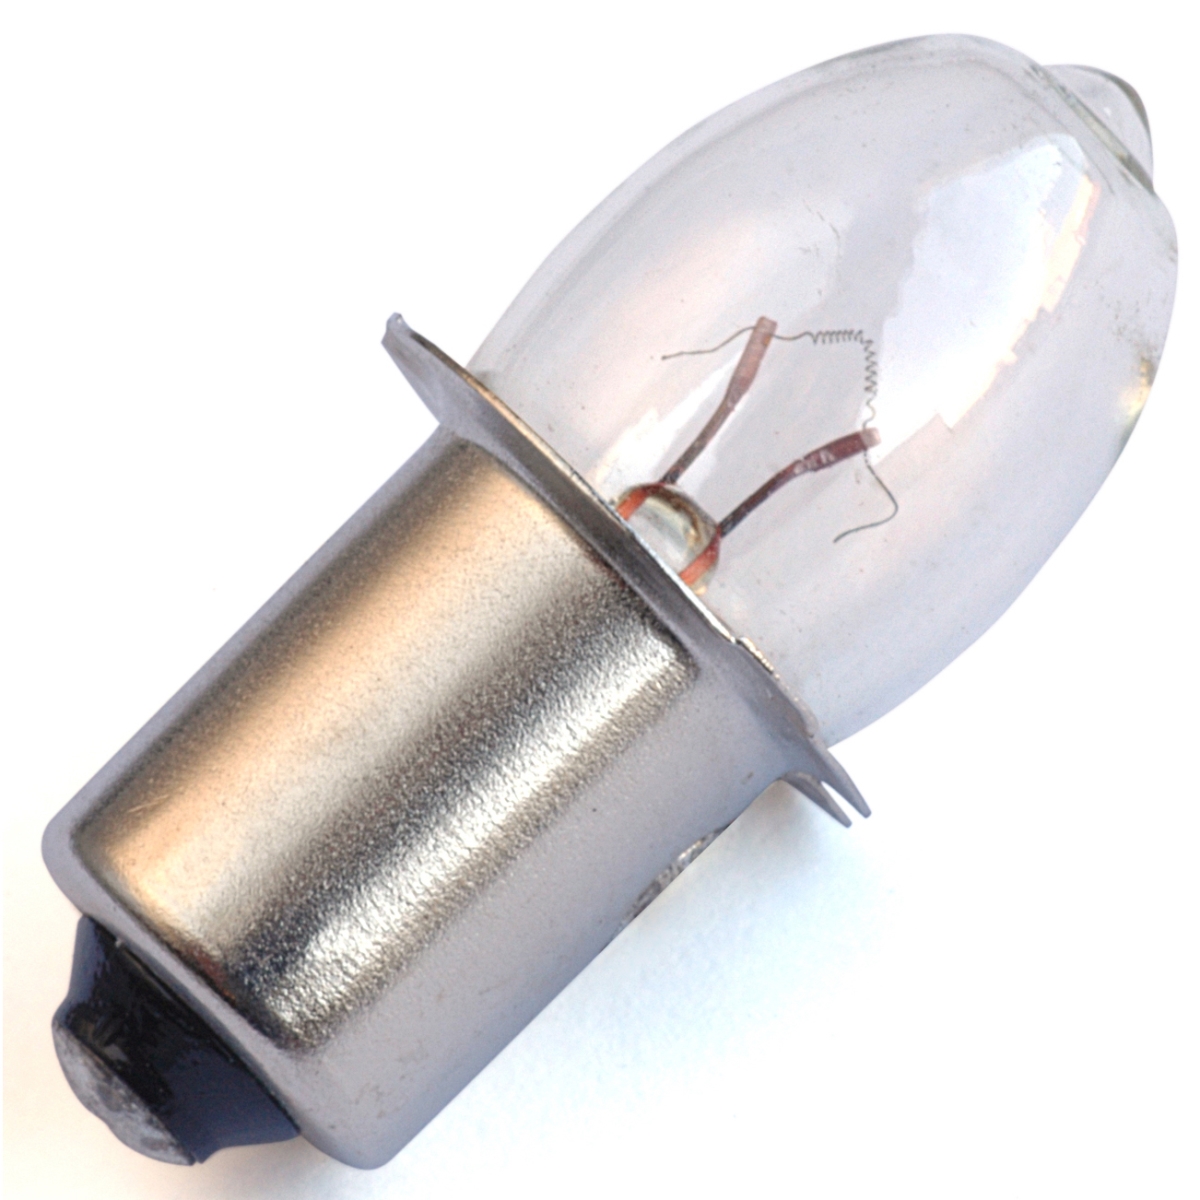 Mb-pr03 3.57 V 3-d Cell Miniature Light Bulbs, Clear